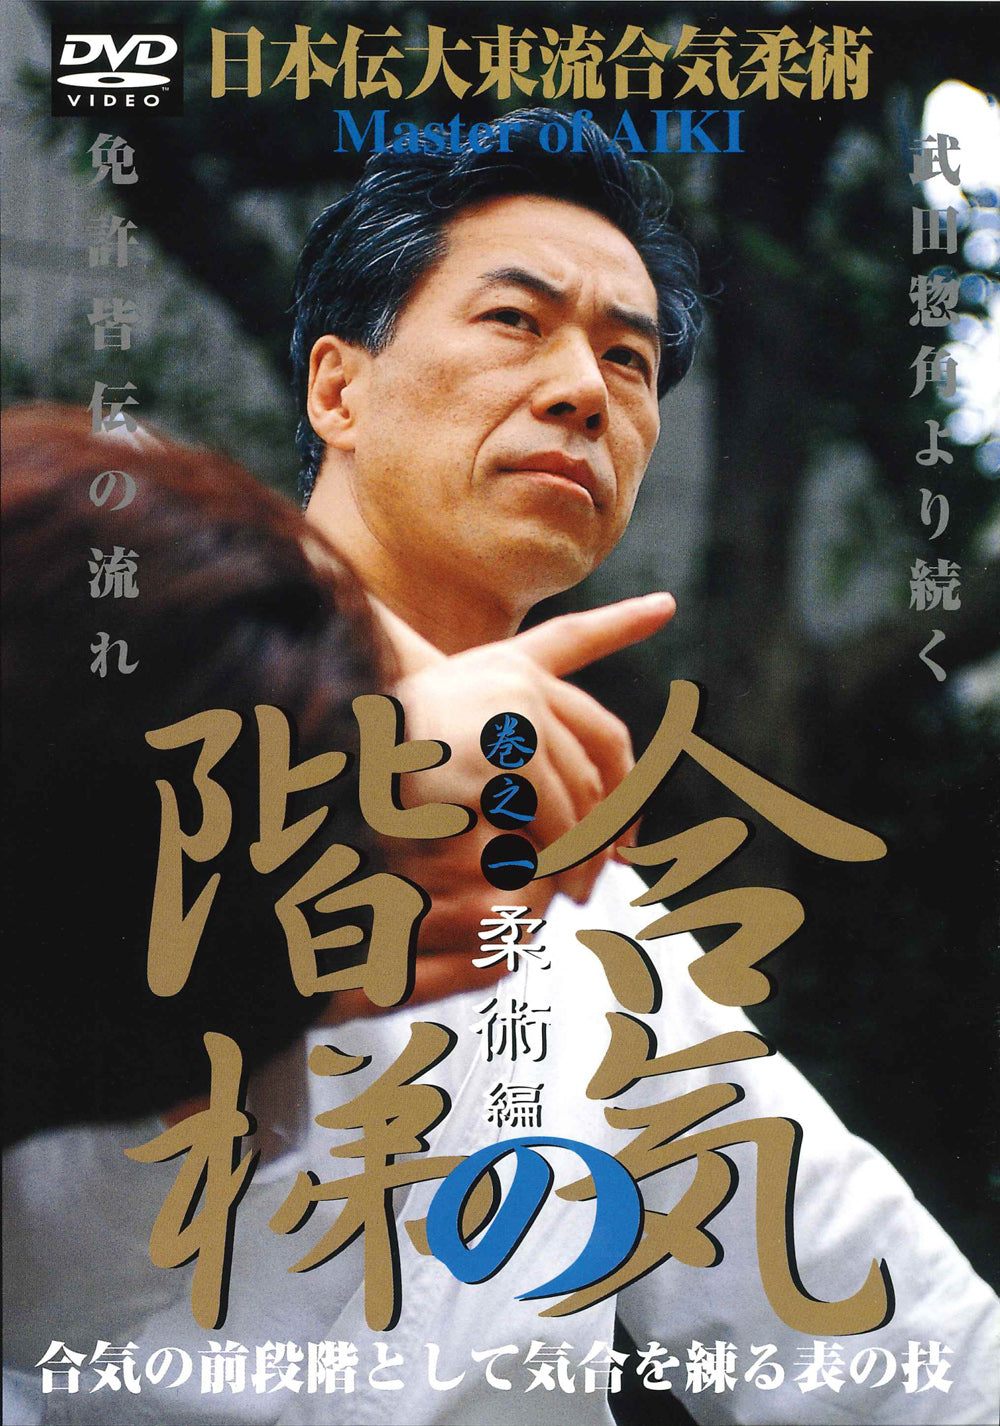 Maestro de Aiki DVD 1 de Kogen Sugasawa